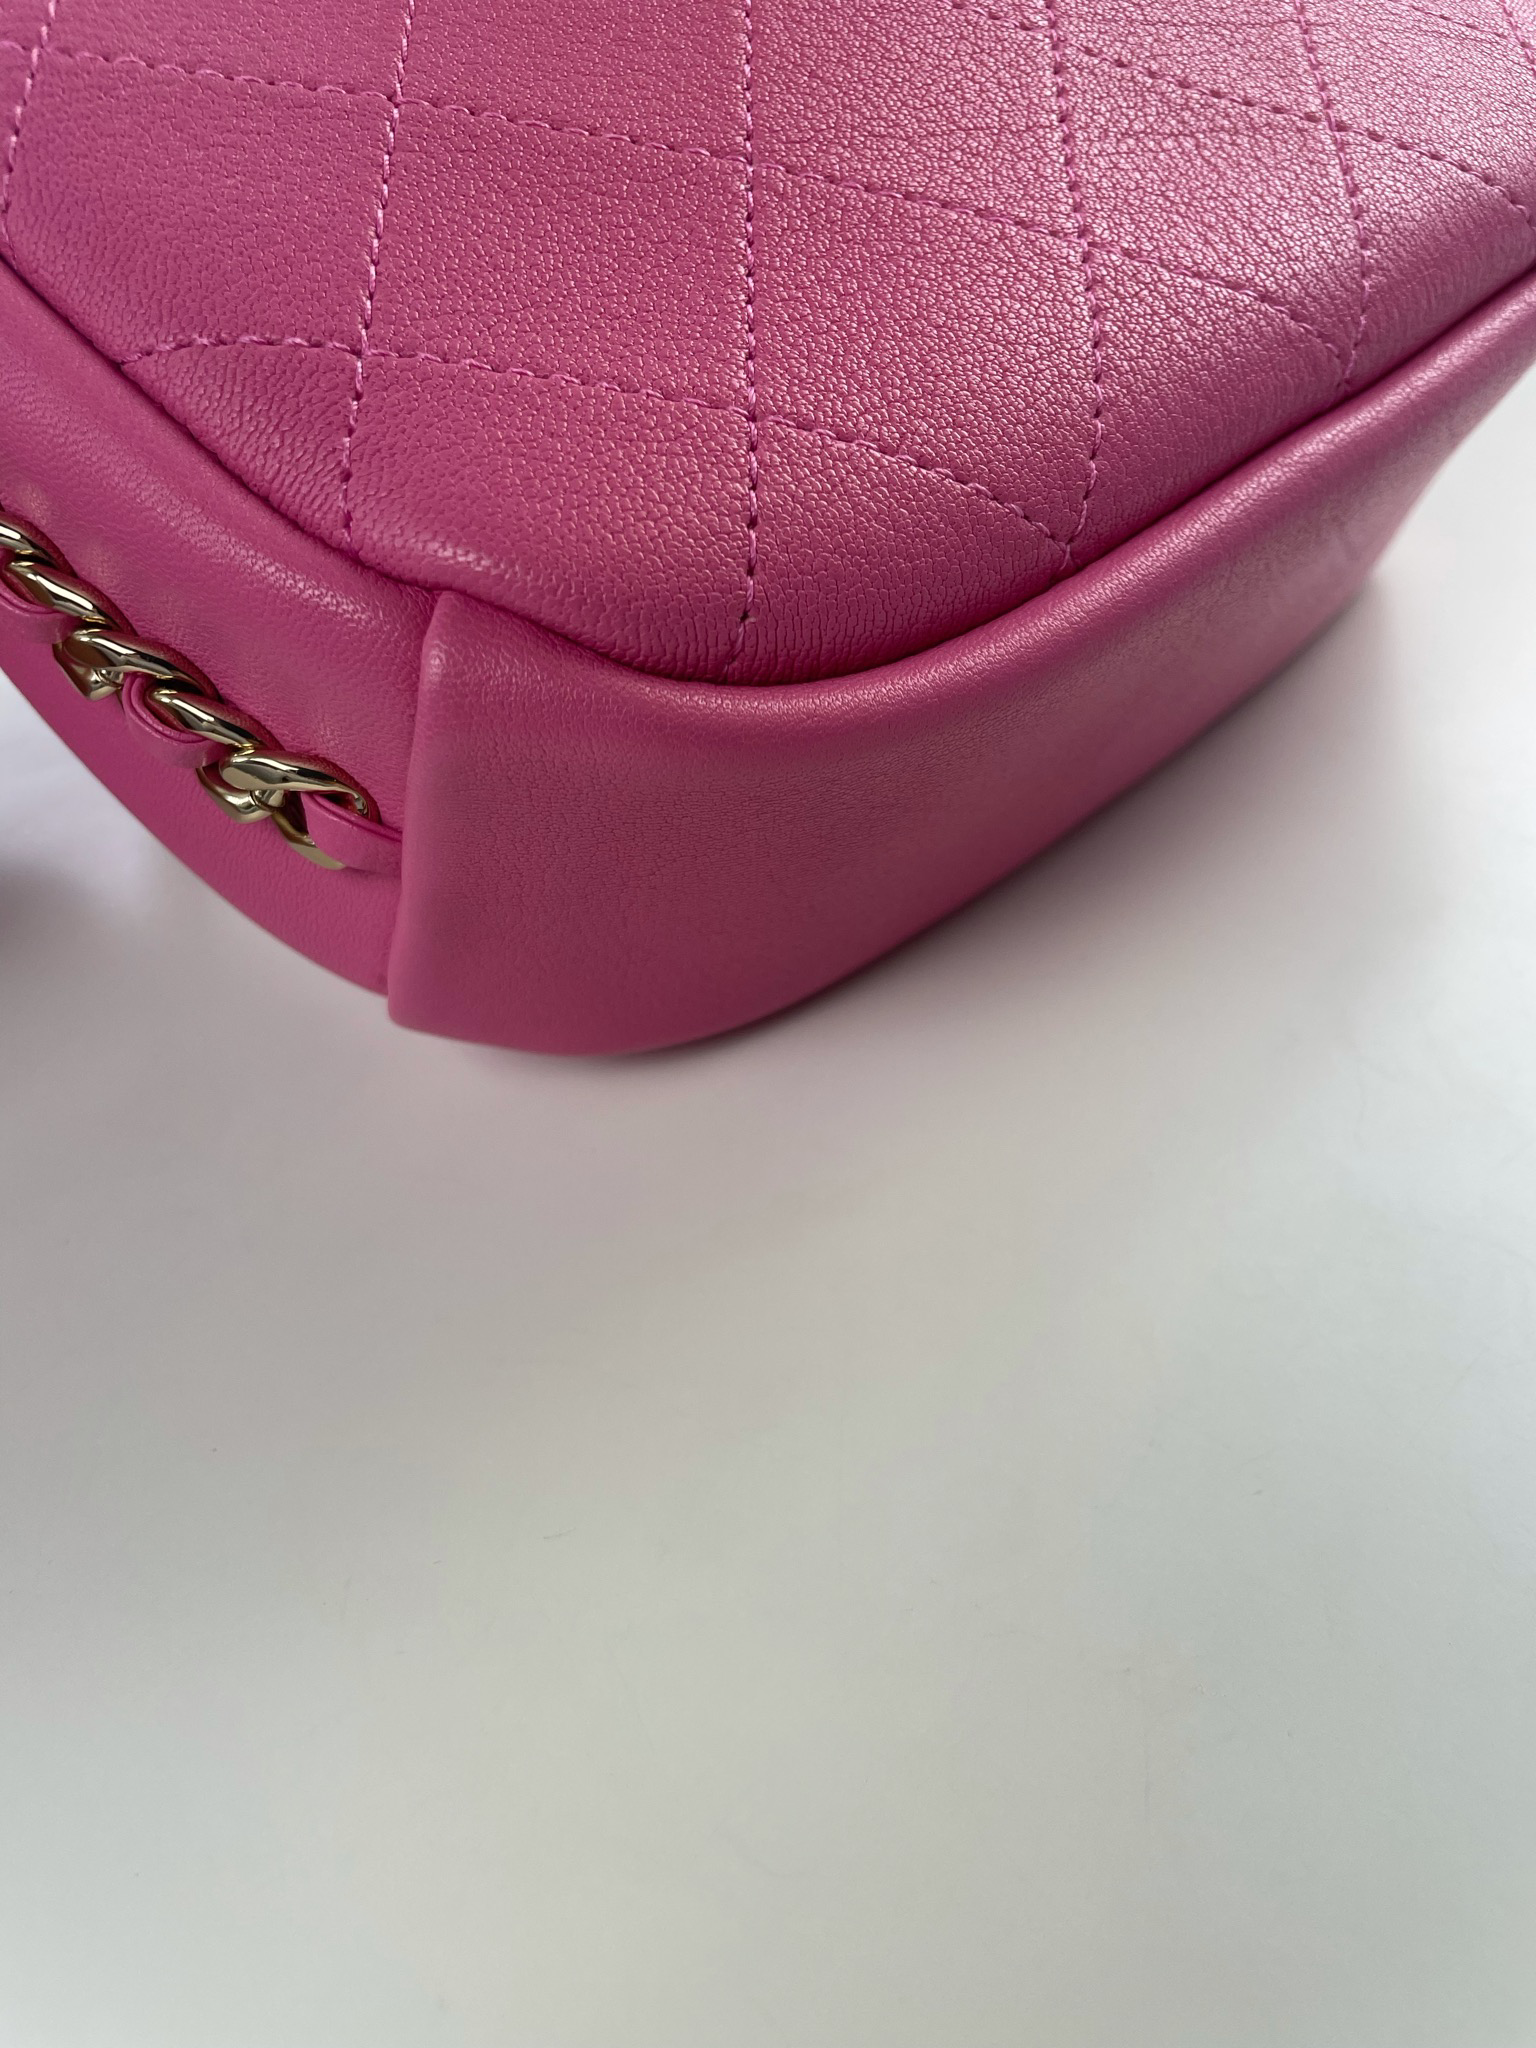 Chanel Casual Trip Camera Bag, Pink Calfskin with Gold Hardware, Preowned  in Box WA001 - Julia Rose Boston